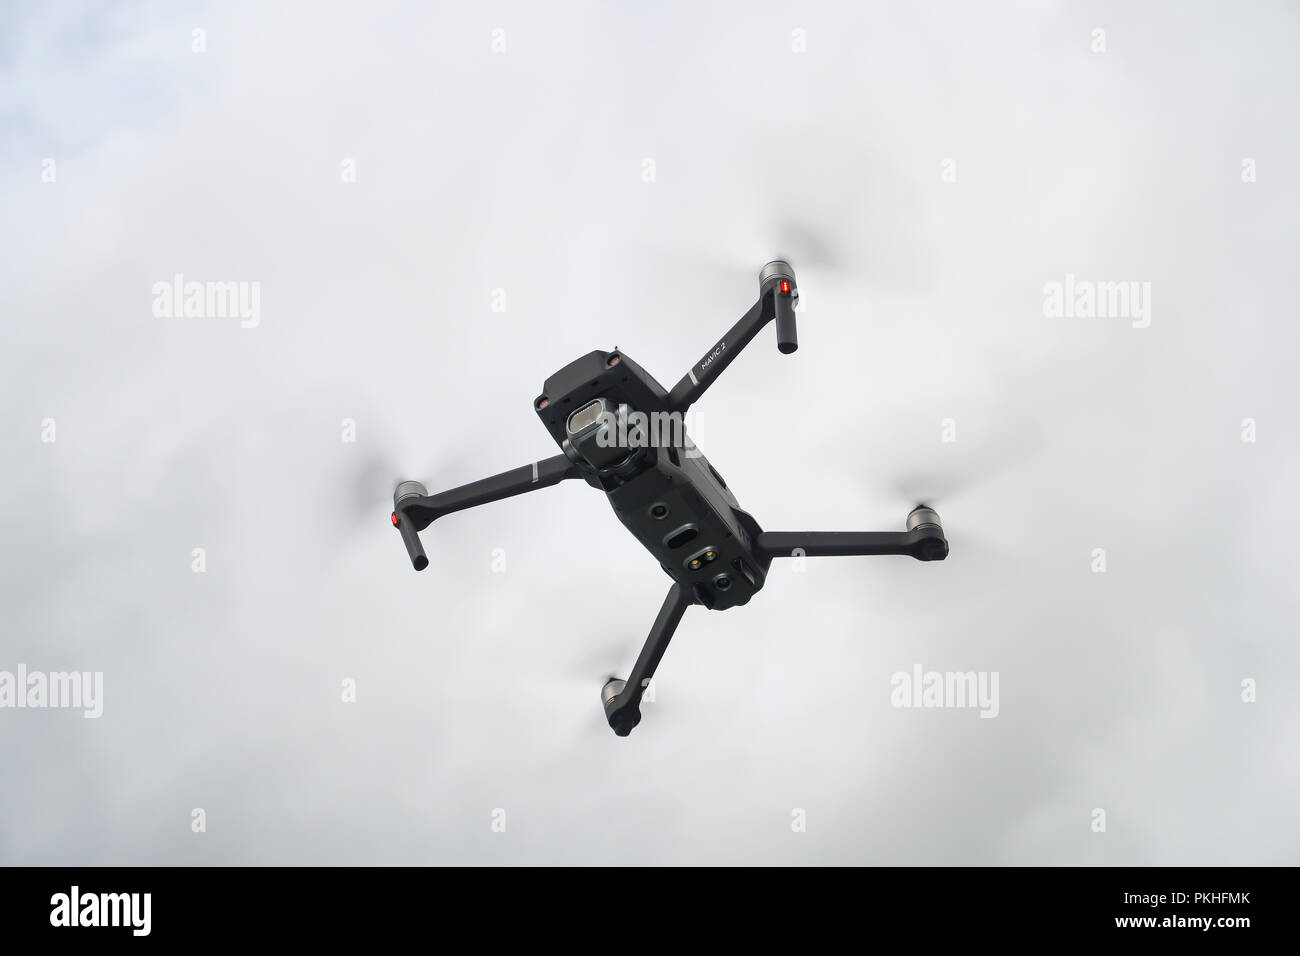 DJI Mavic 2 Pro drone Stock Photo